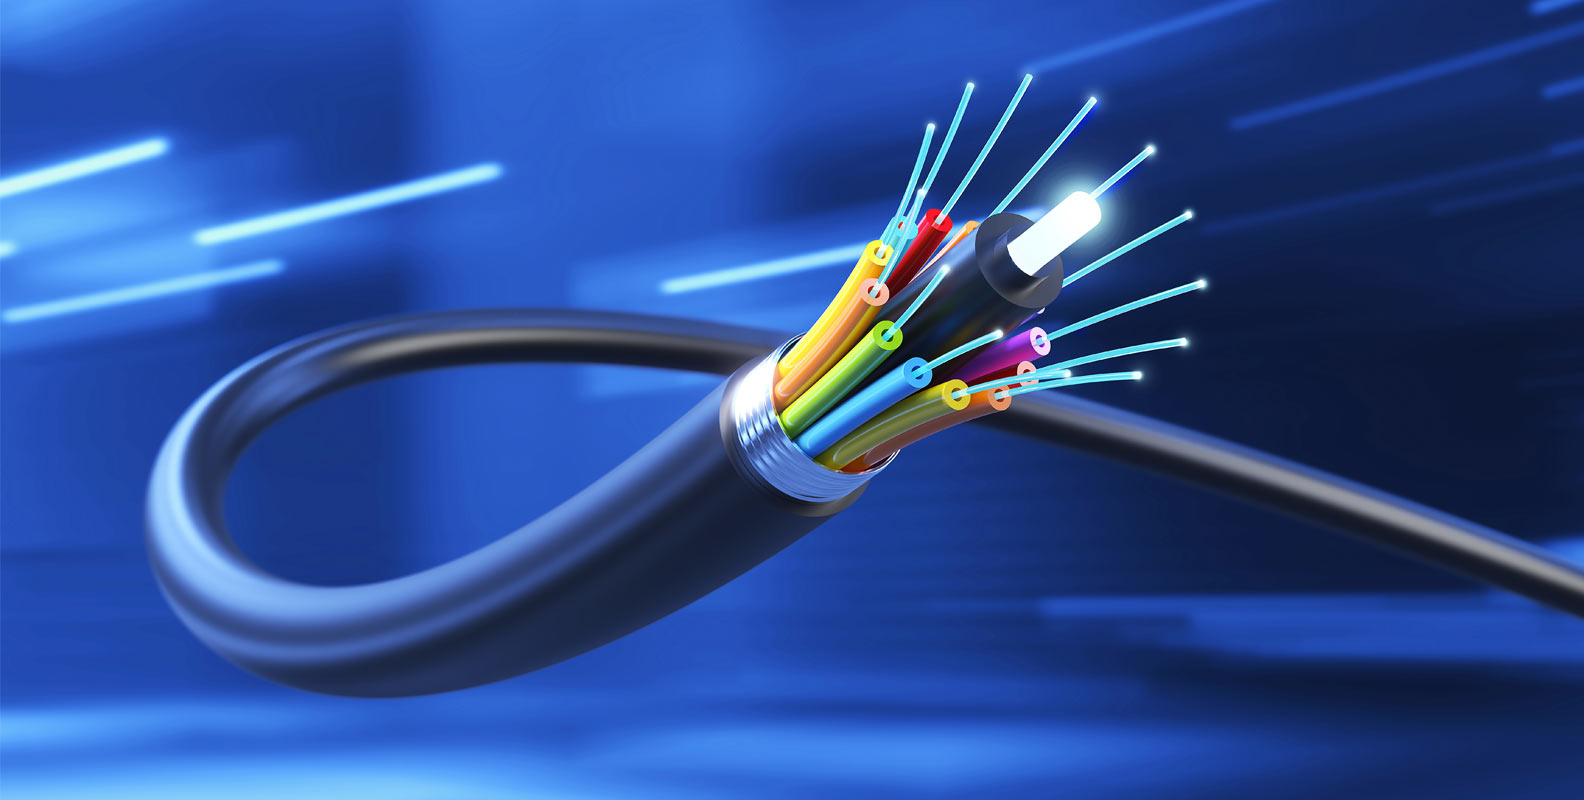 fiber optic cable for fiber internet speed